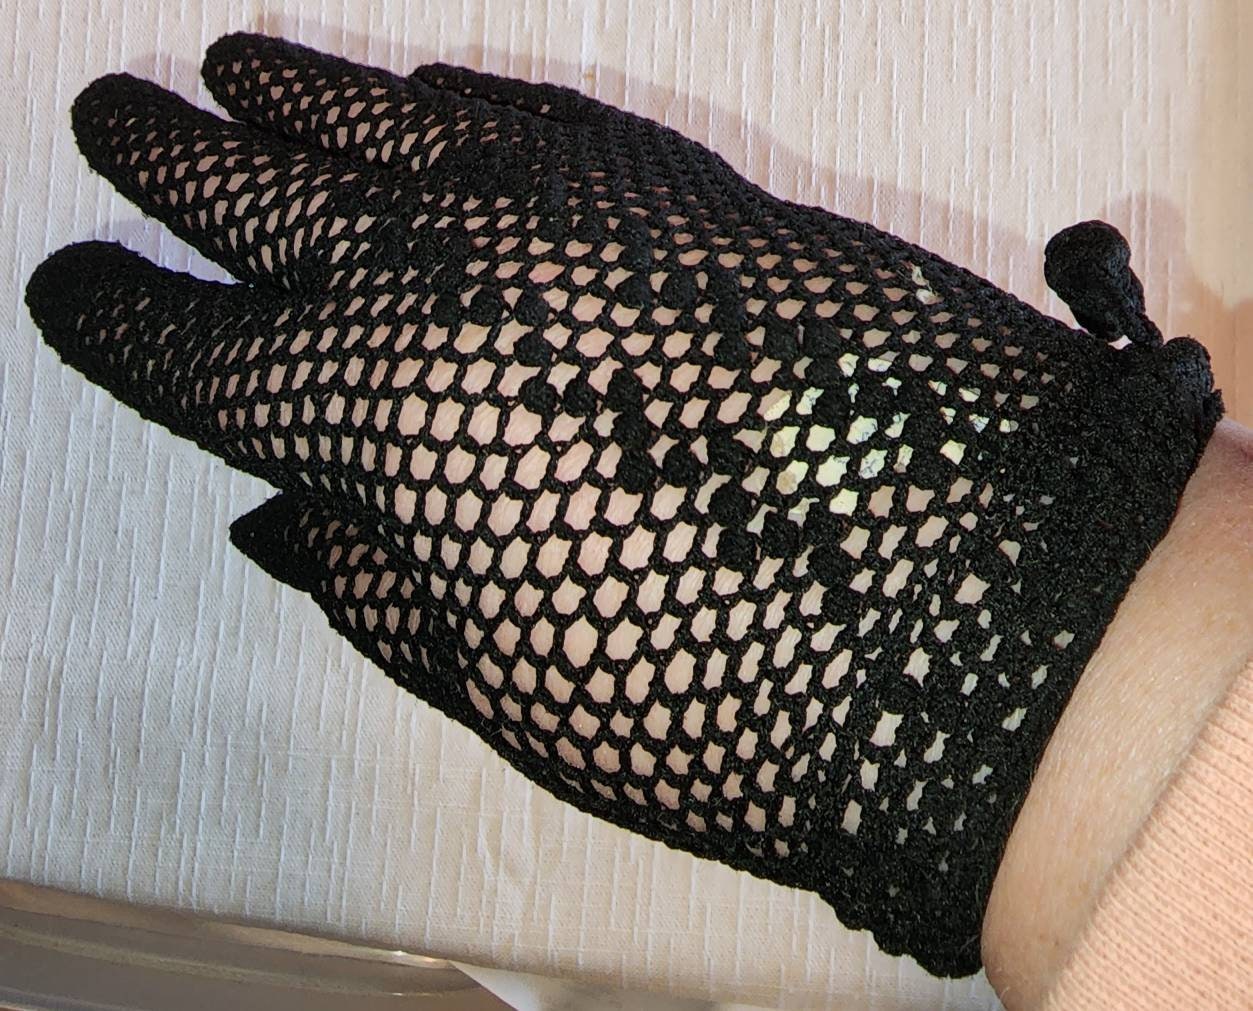 Vintage Net Gloves 1950s Black Crochet Nylon Net Wrist Gloves Dangling Ball Details Wear Right Italy Mid Century Rockabilly Boho